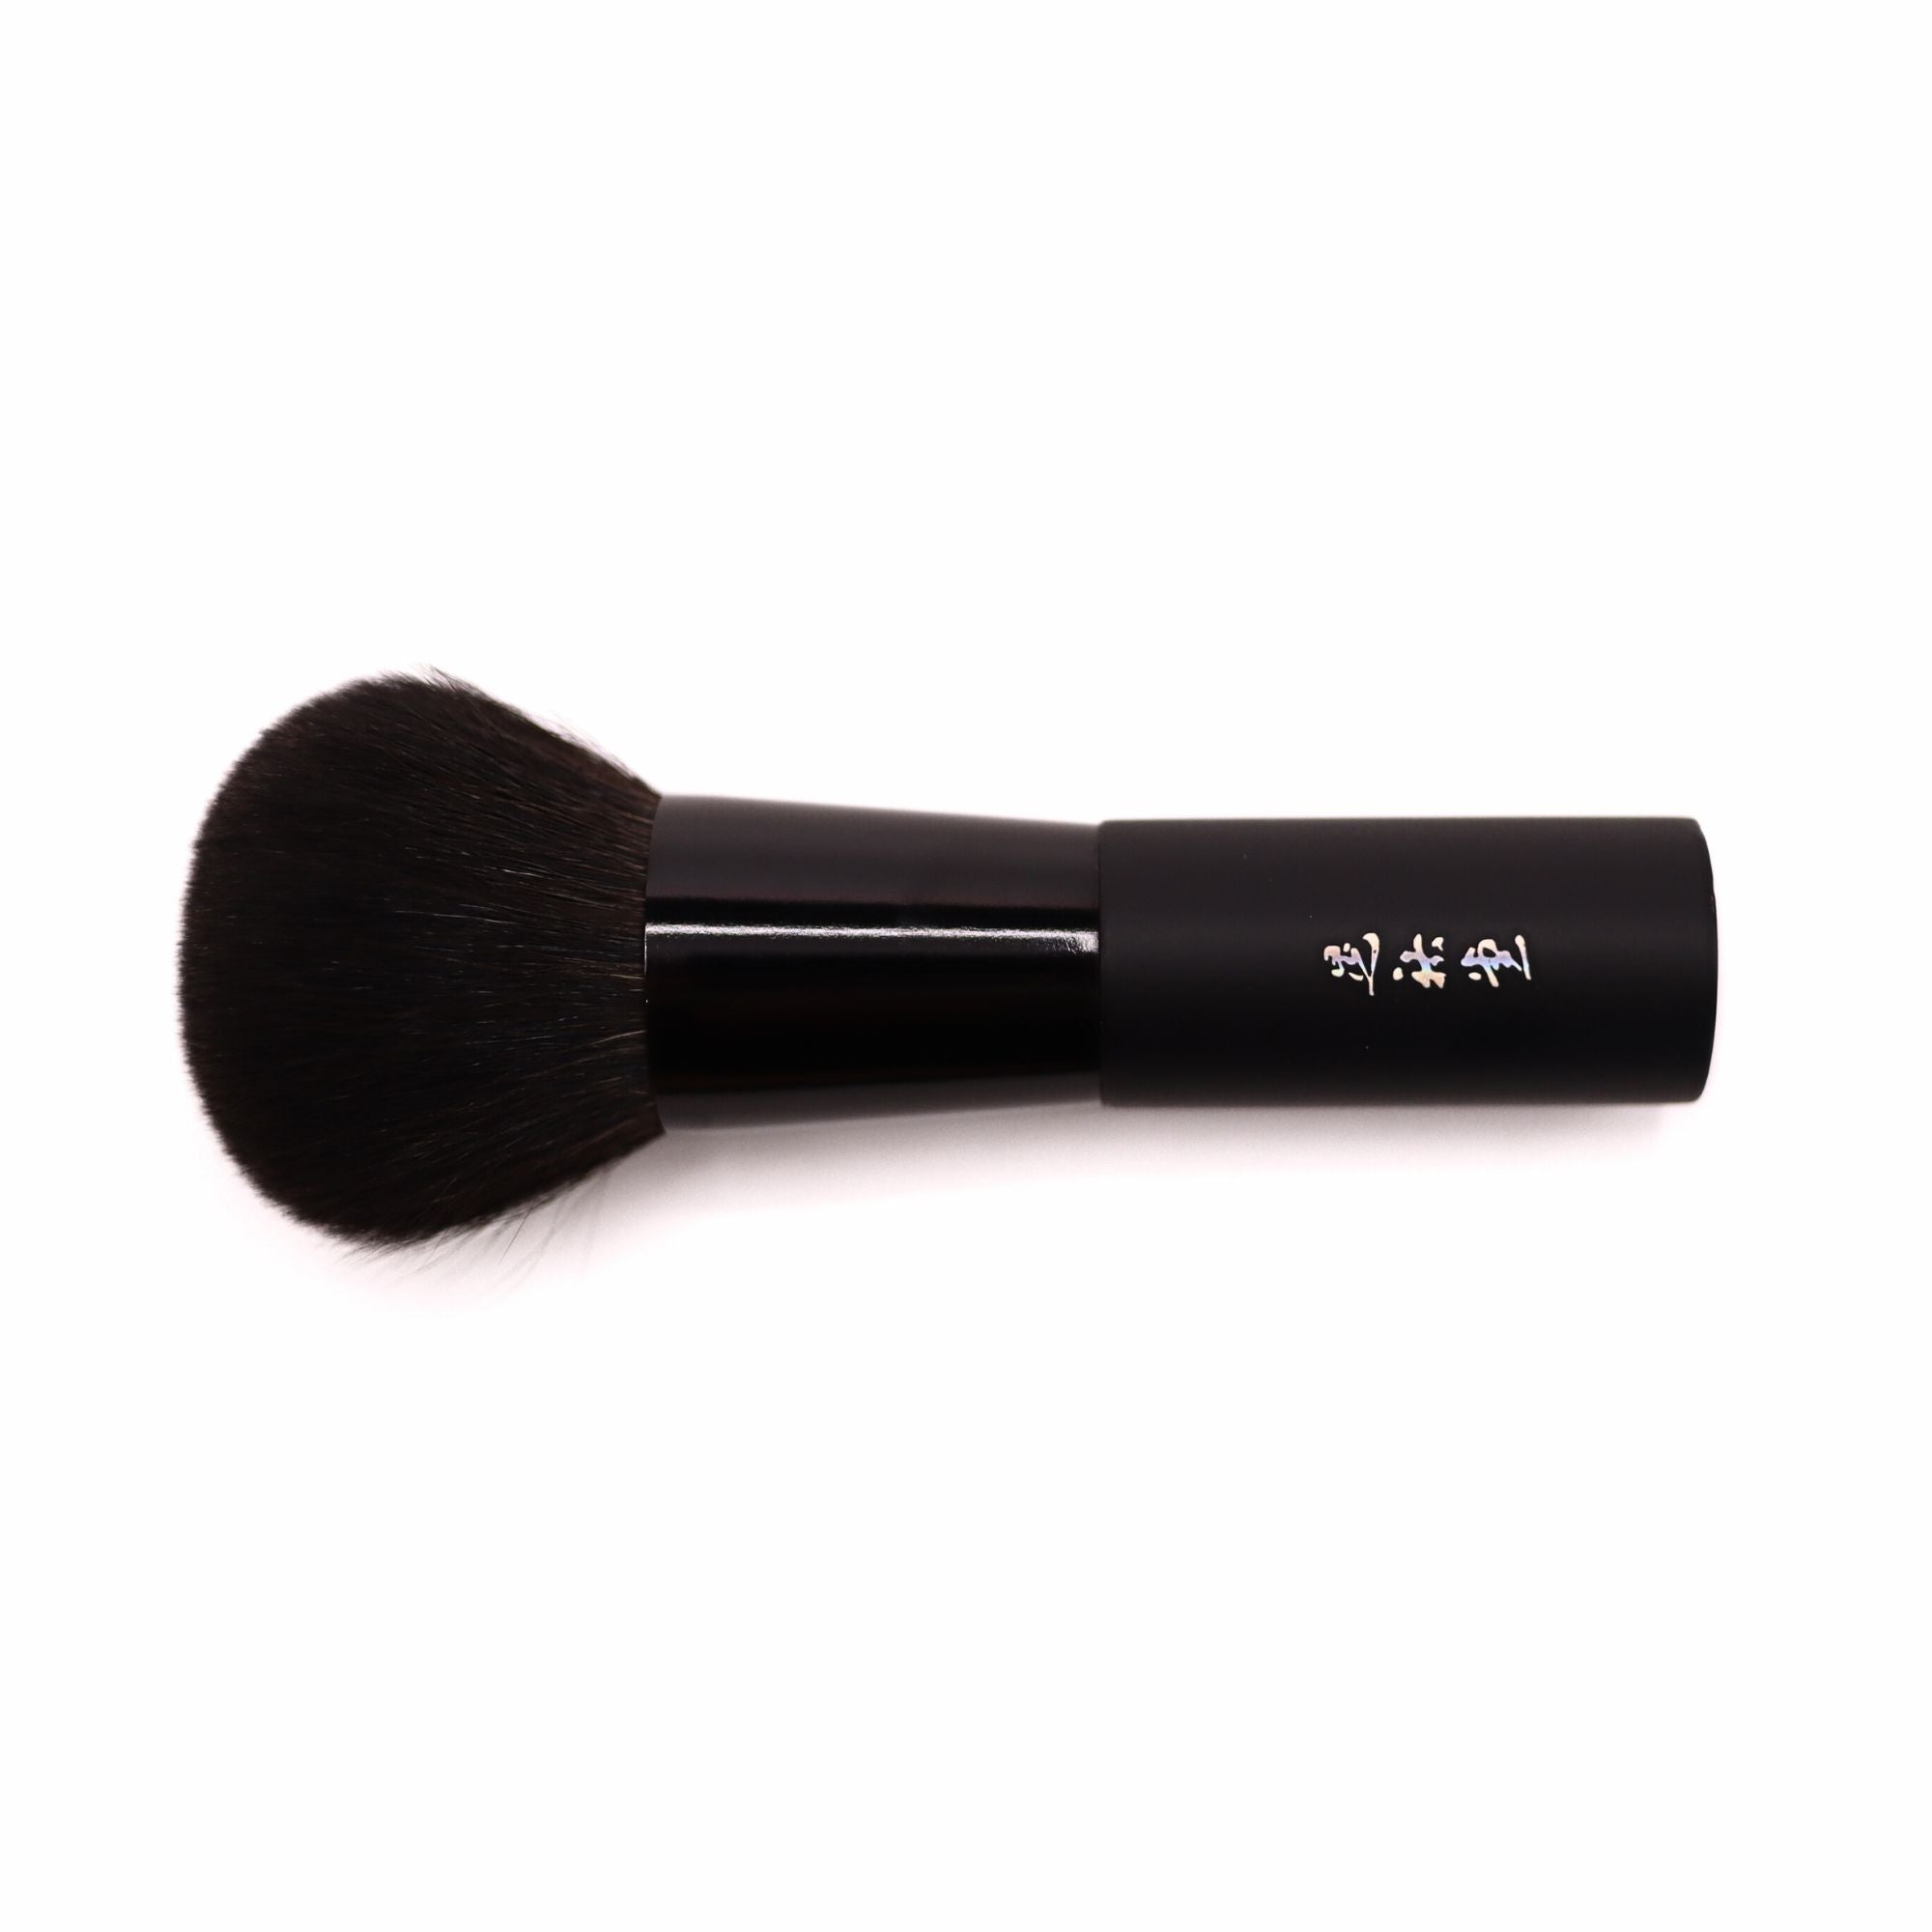 Koyudo Fu-pa14 Powder Brush (Flat) REVIVAL - Fude Beauty, Japanese Makeup Brushes